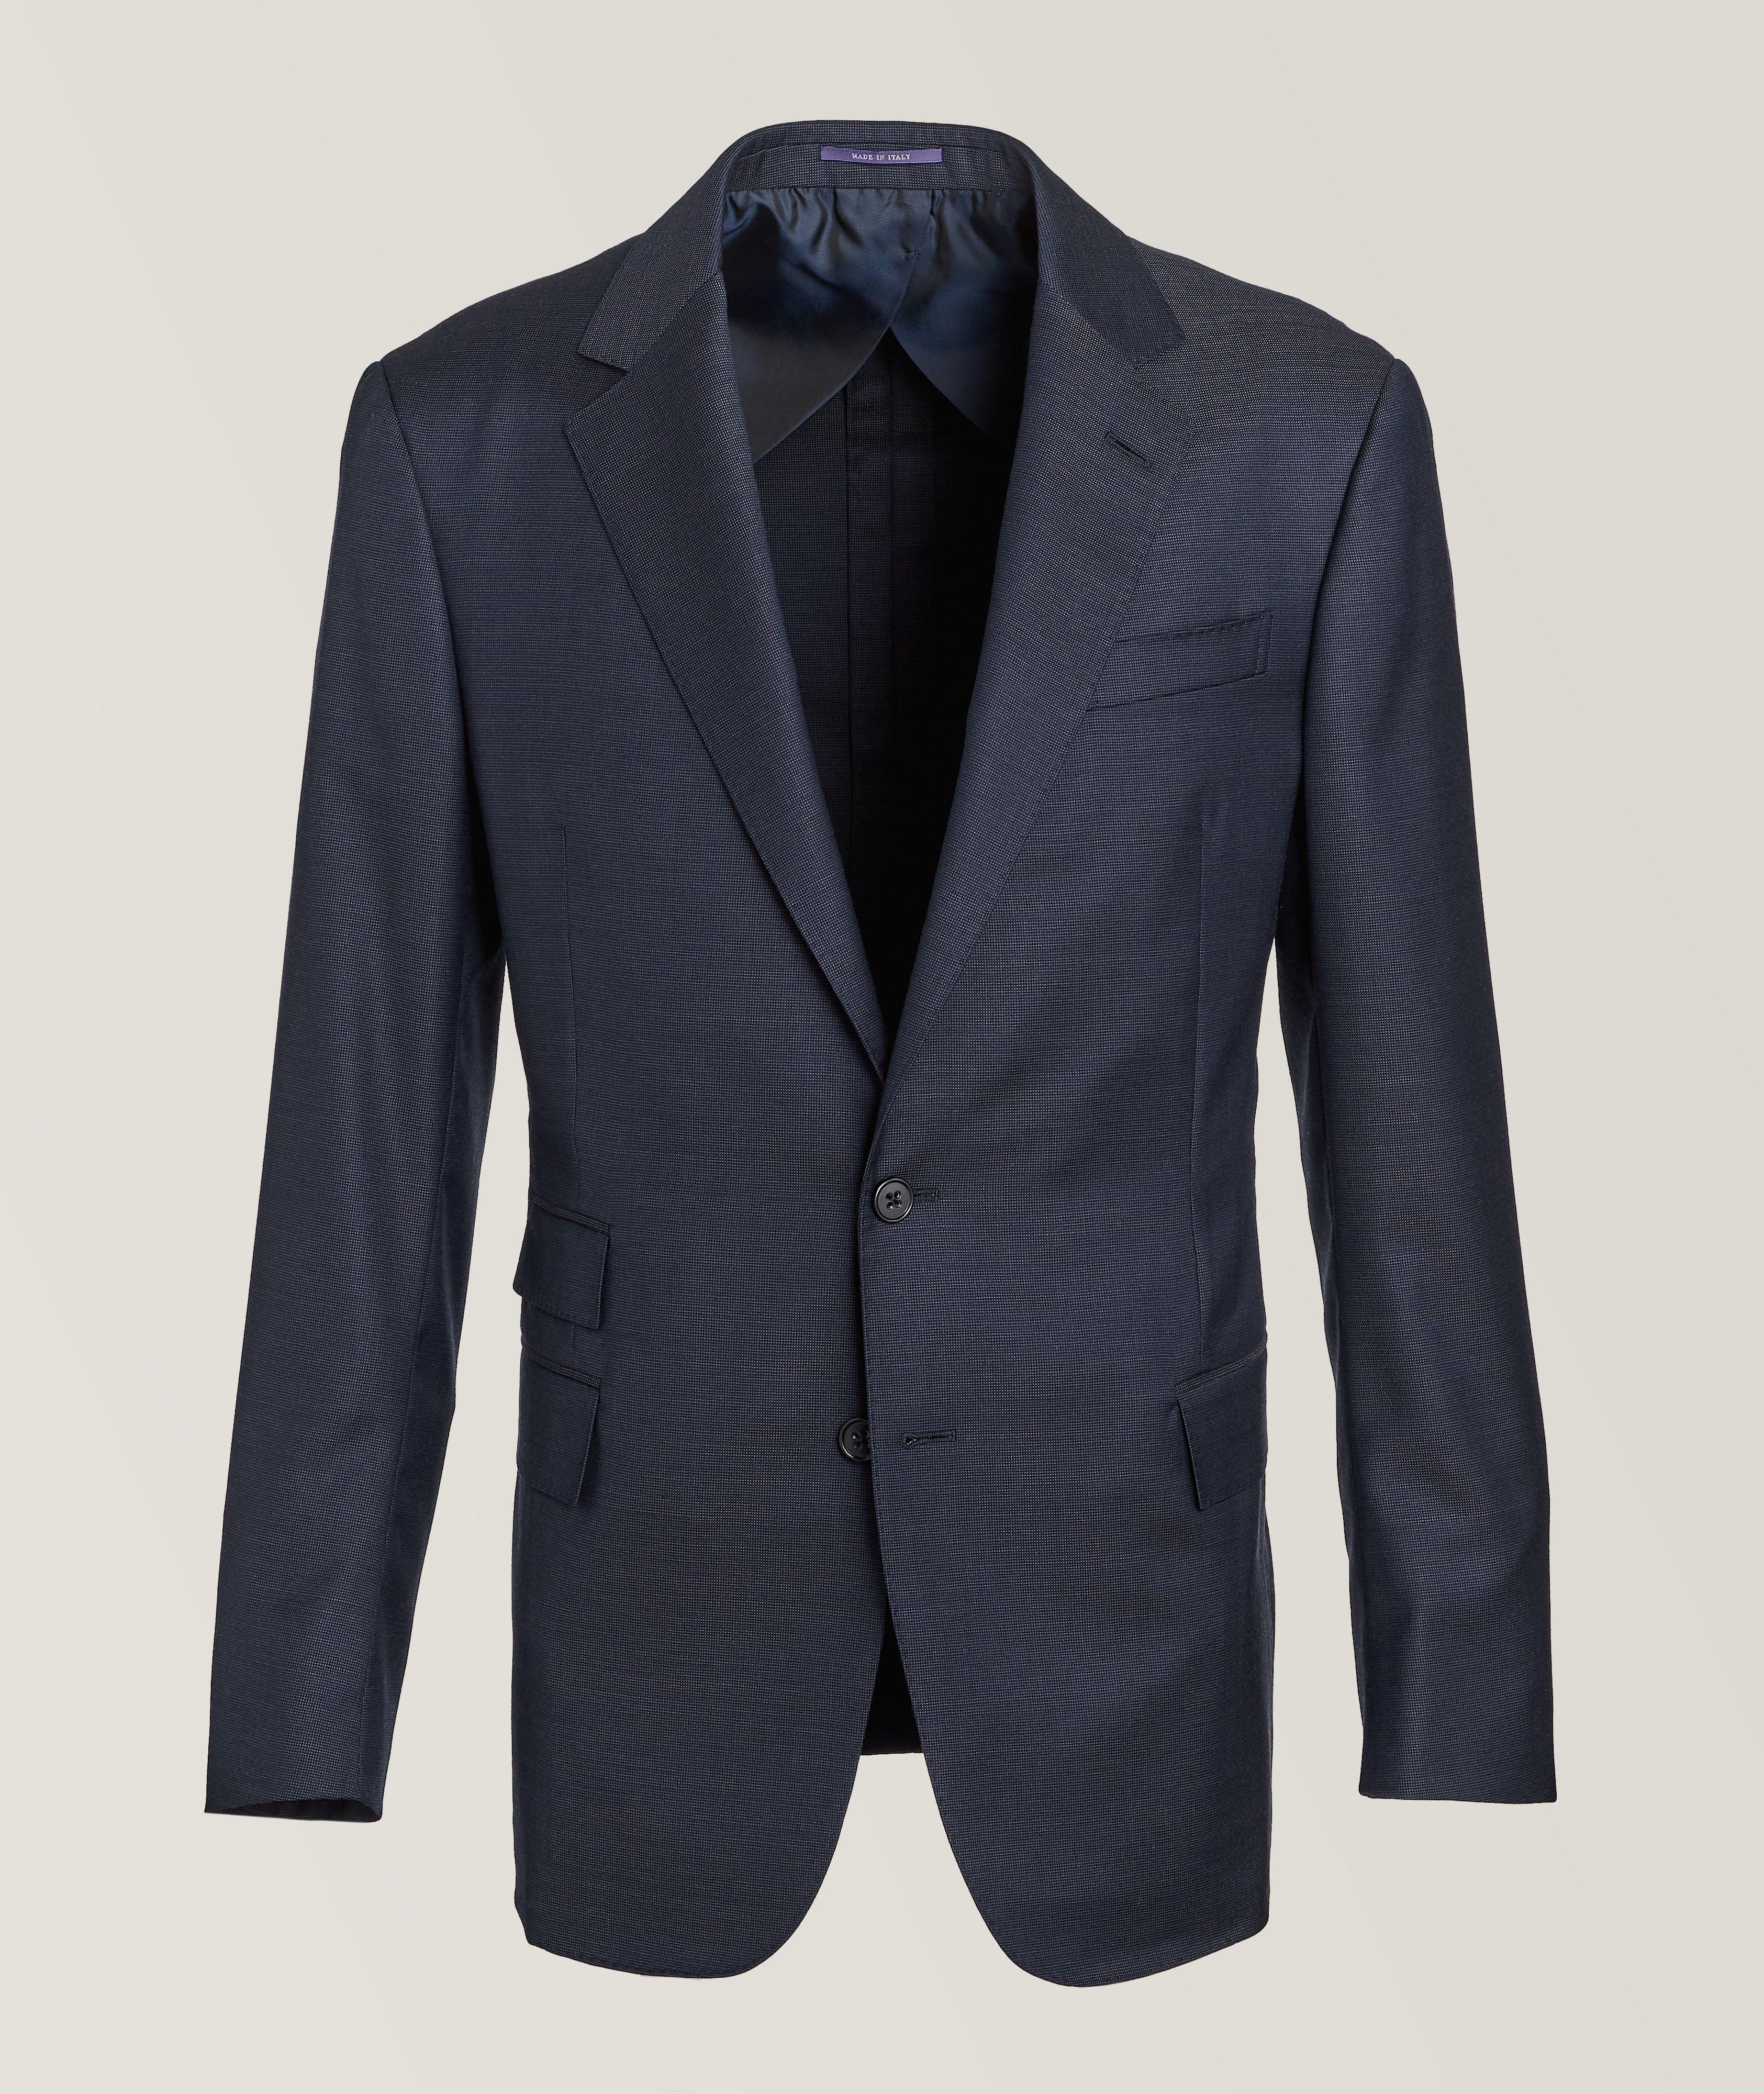 Kent Nailhead Wool-Cashmere Suit  image 0